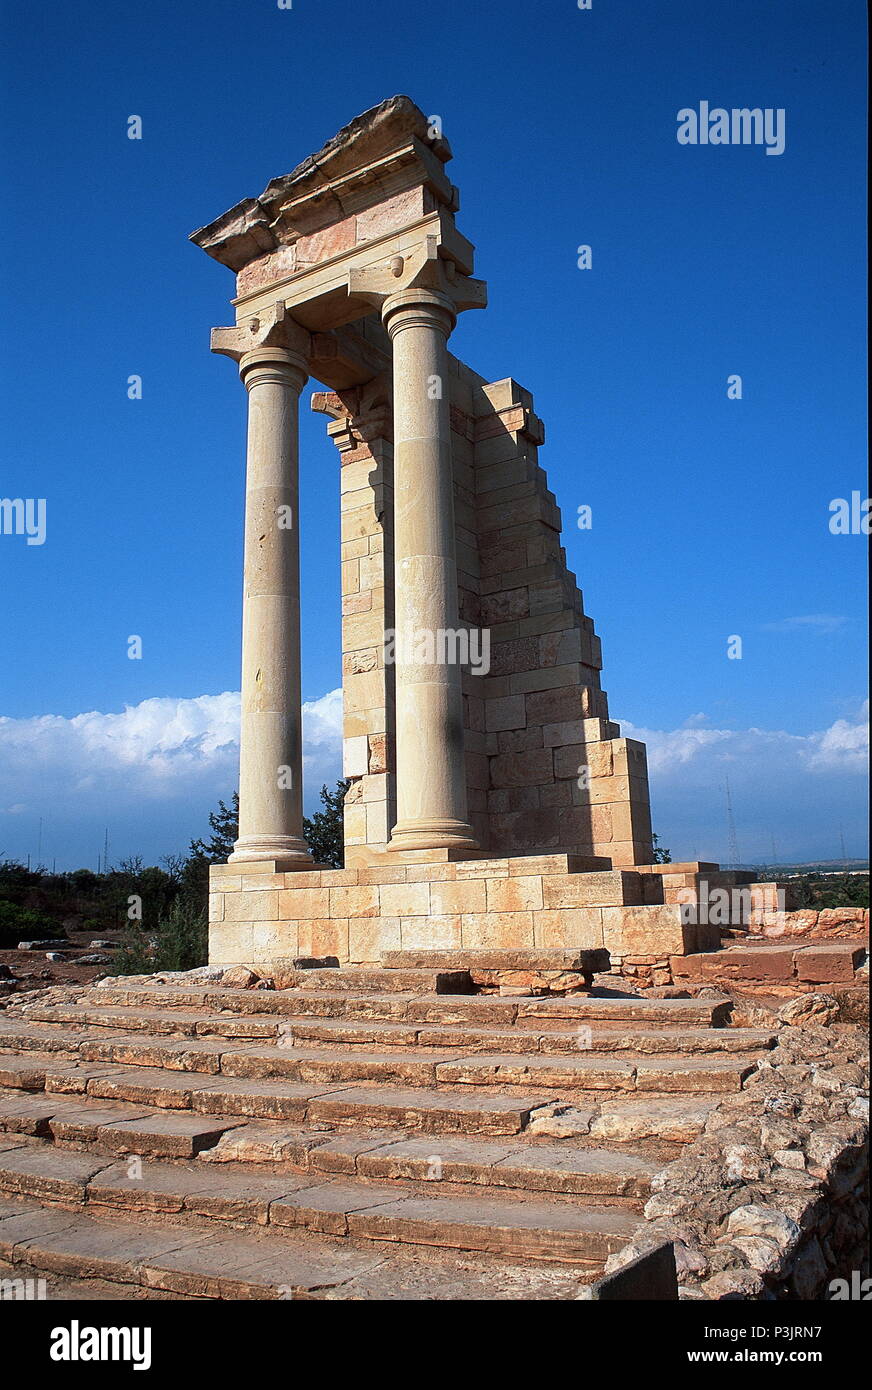 Republic of Cyprus - Temple of Apollo Hylates Stock Photo